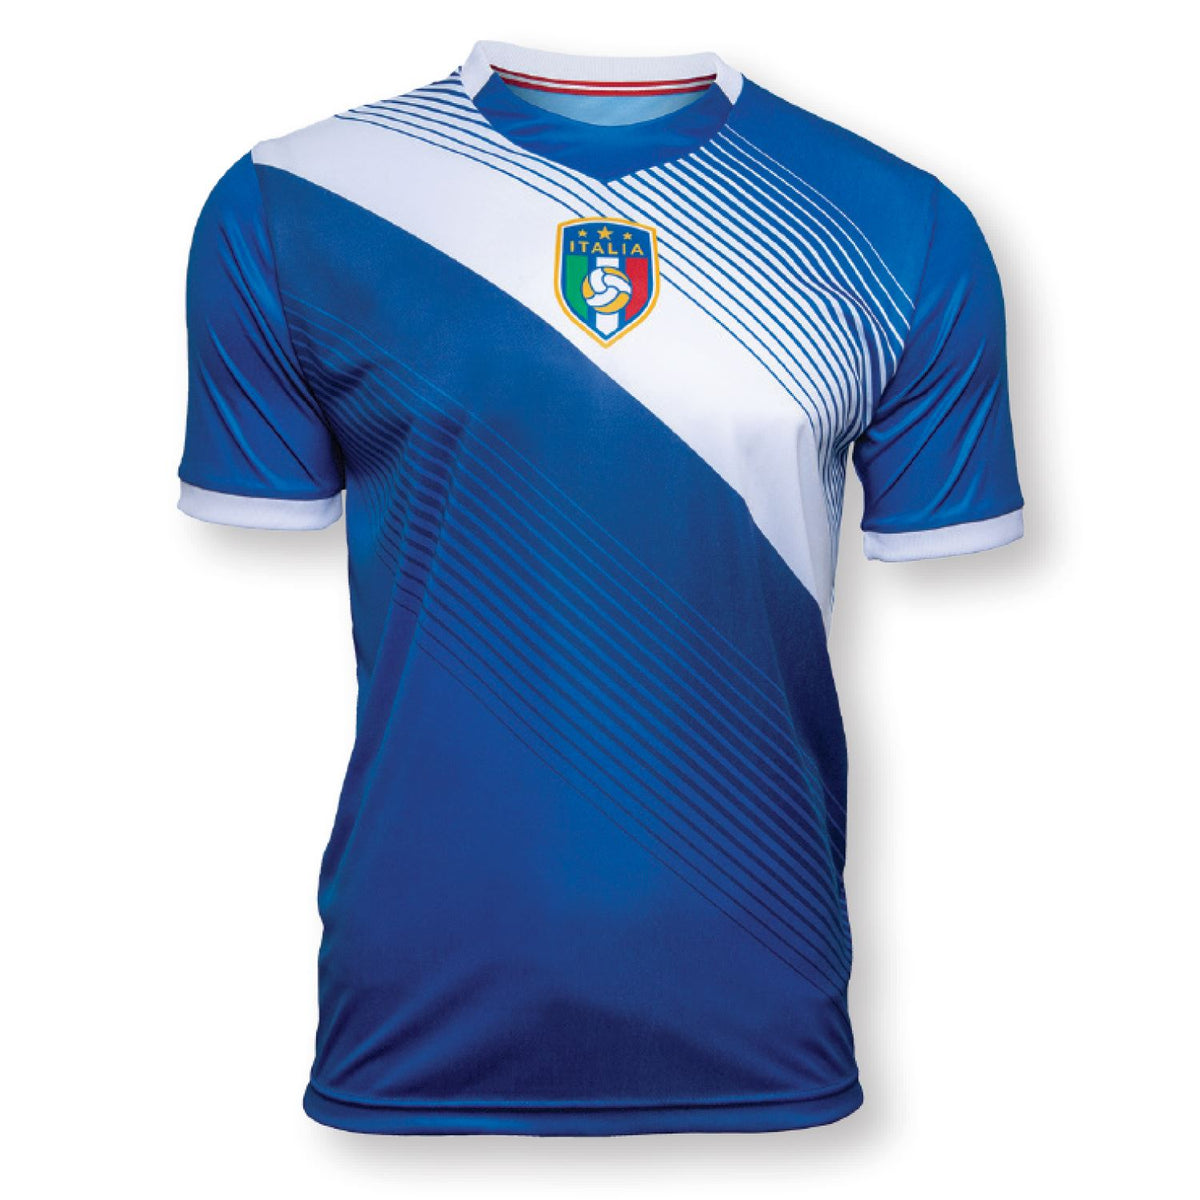 Italy Jersey - International Series Theme Series Xara Soccer 